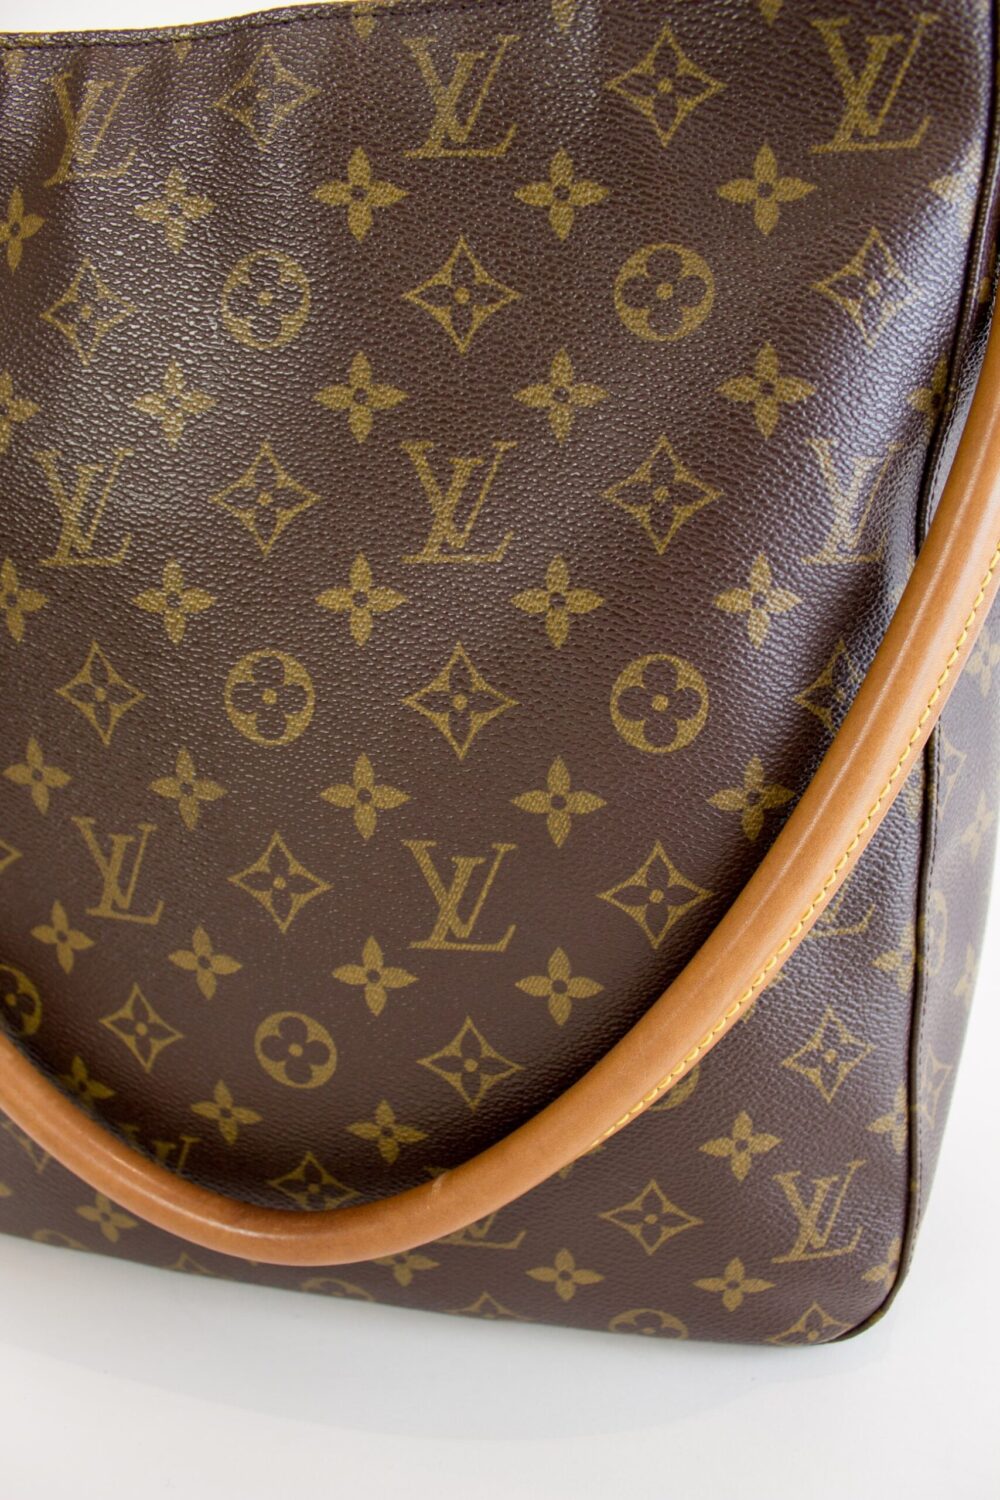 Pre-Loved Louis Vuitton Looping GM Monogram Shoulder Bag - La Matta